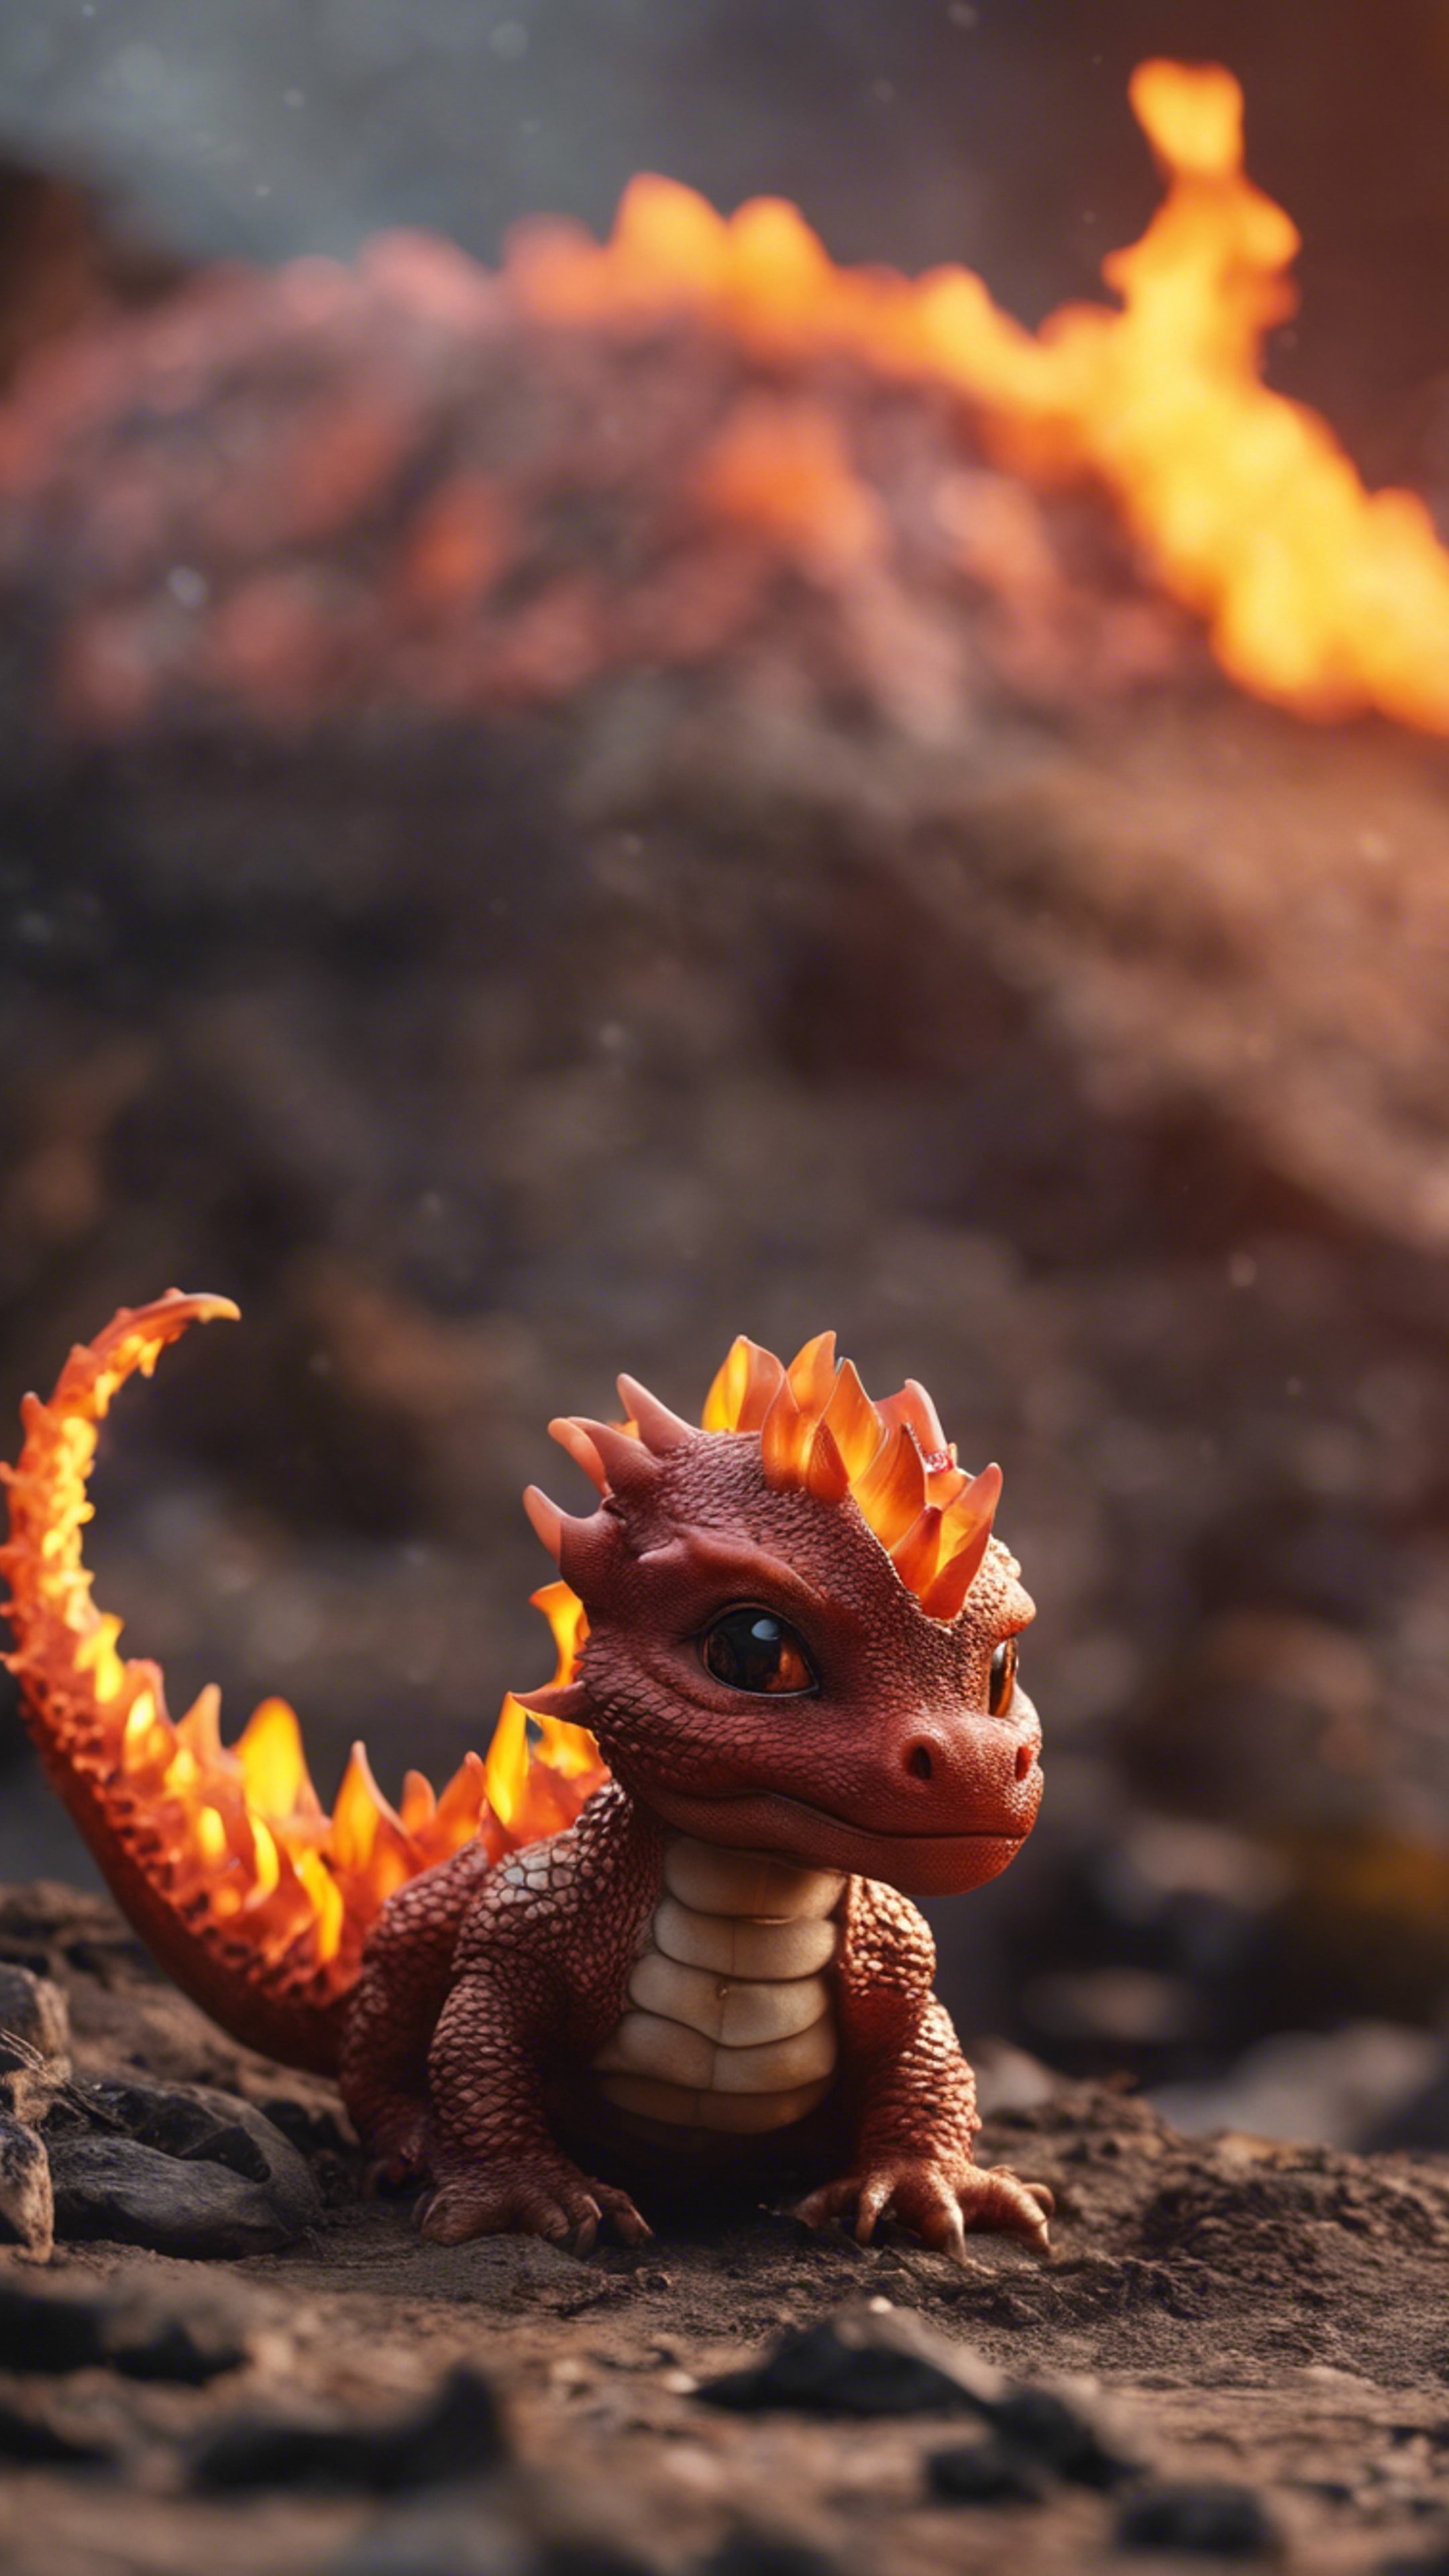 A playful scene of dragon babies learning to breathe fire in the heart of a volcano. duvar kağıdı[cac85ec578df4d0ebe57]